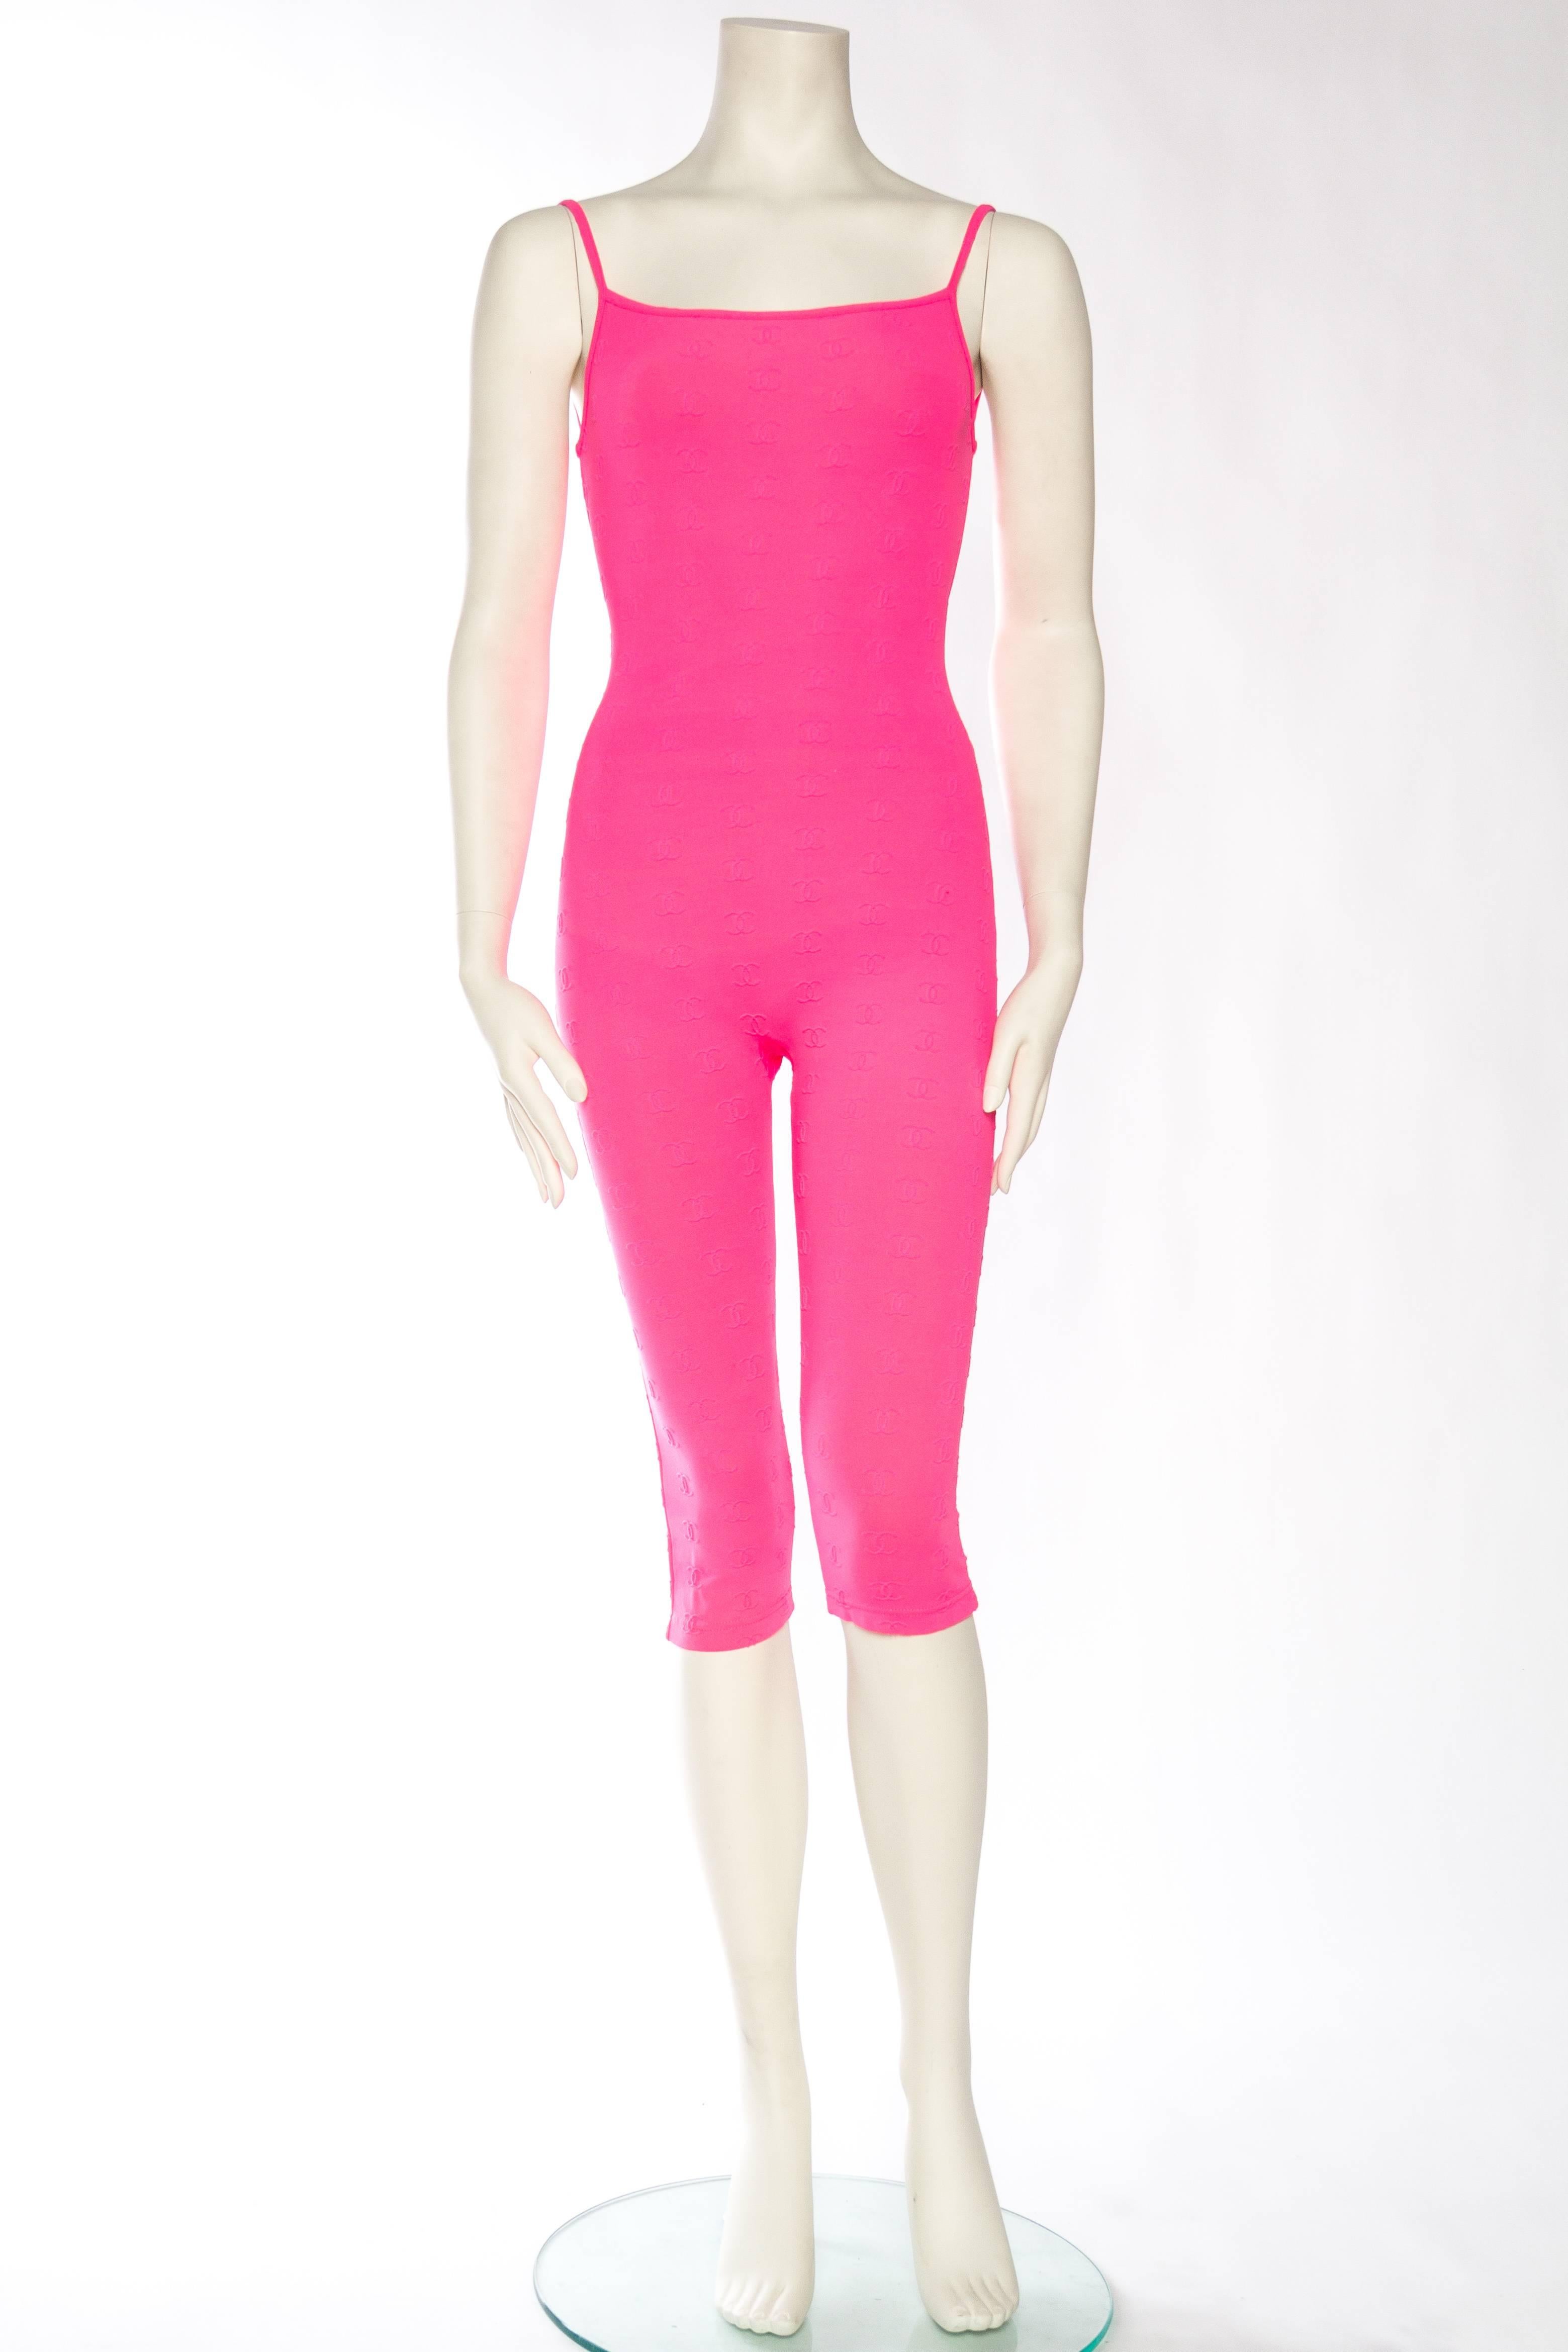 chanel pink bodysuit